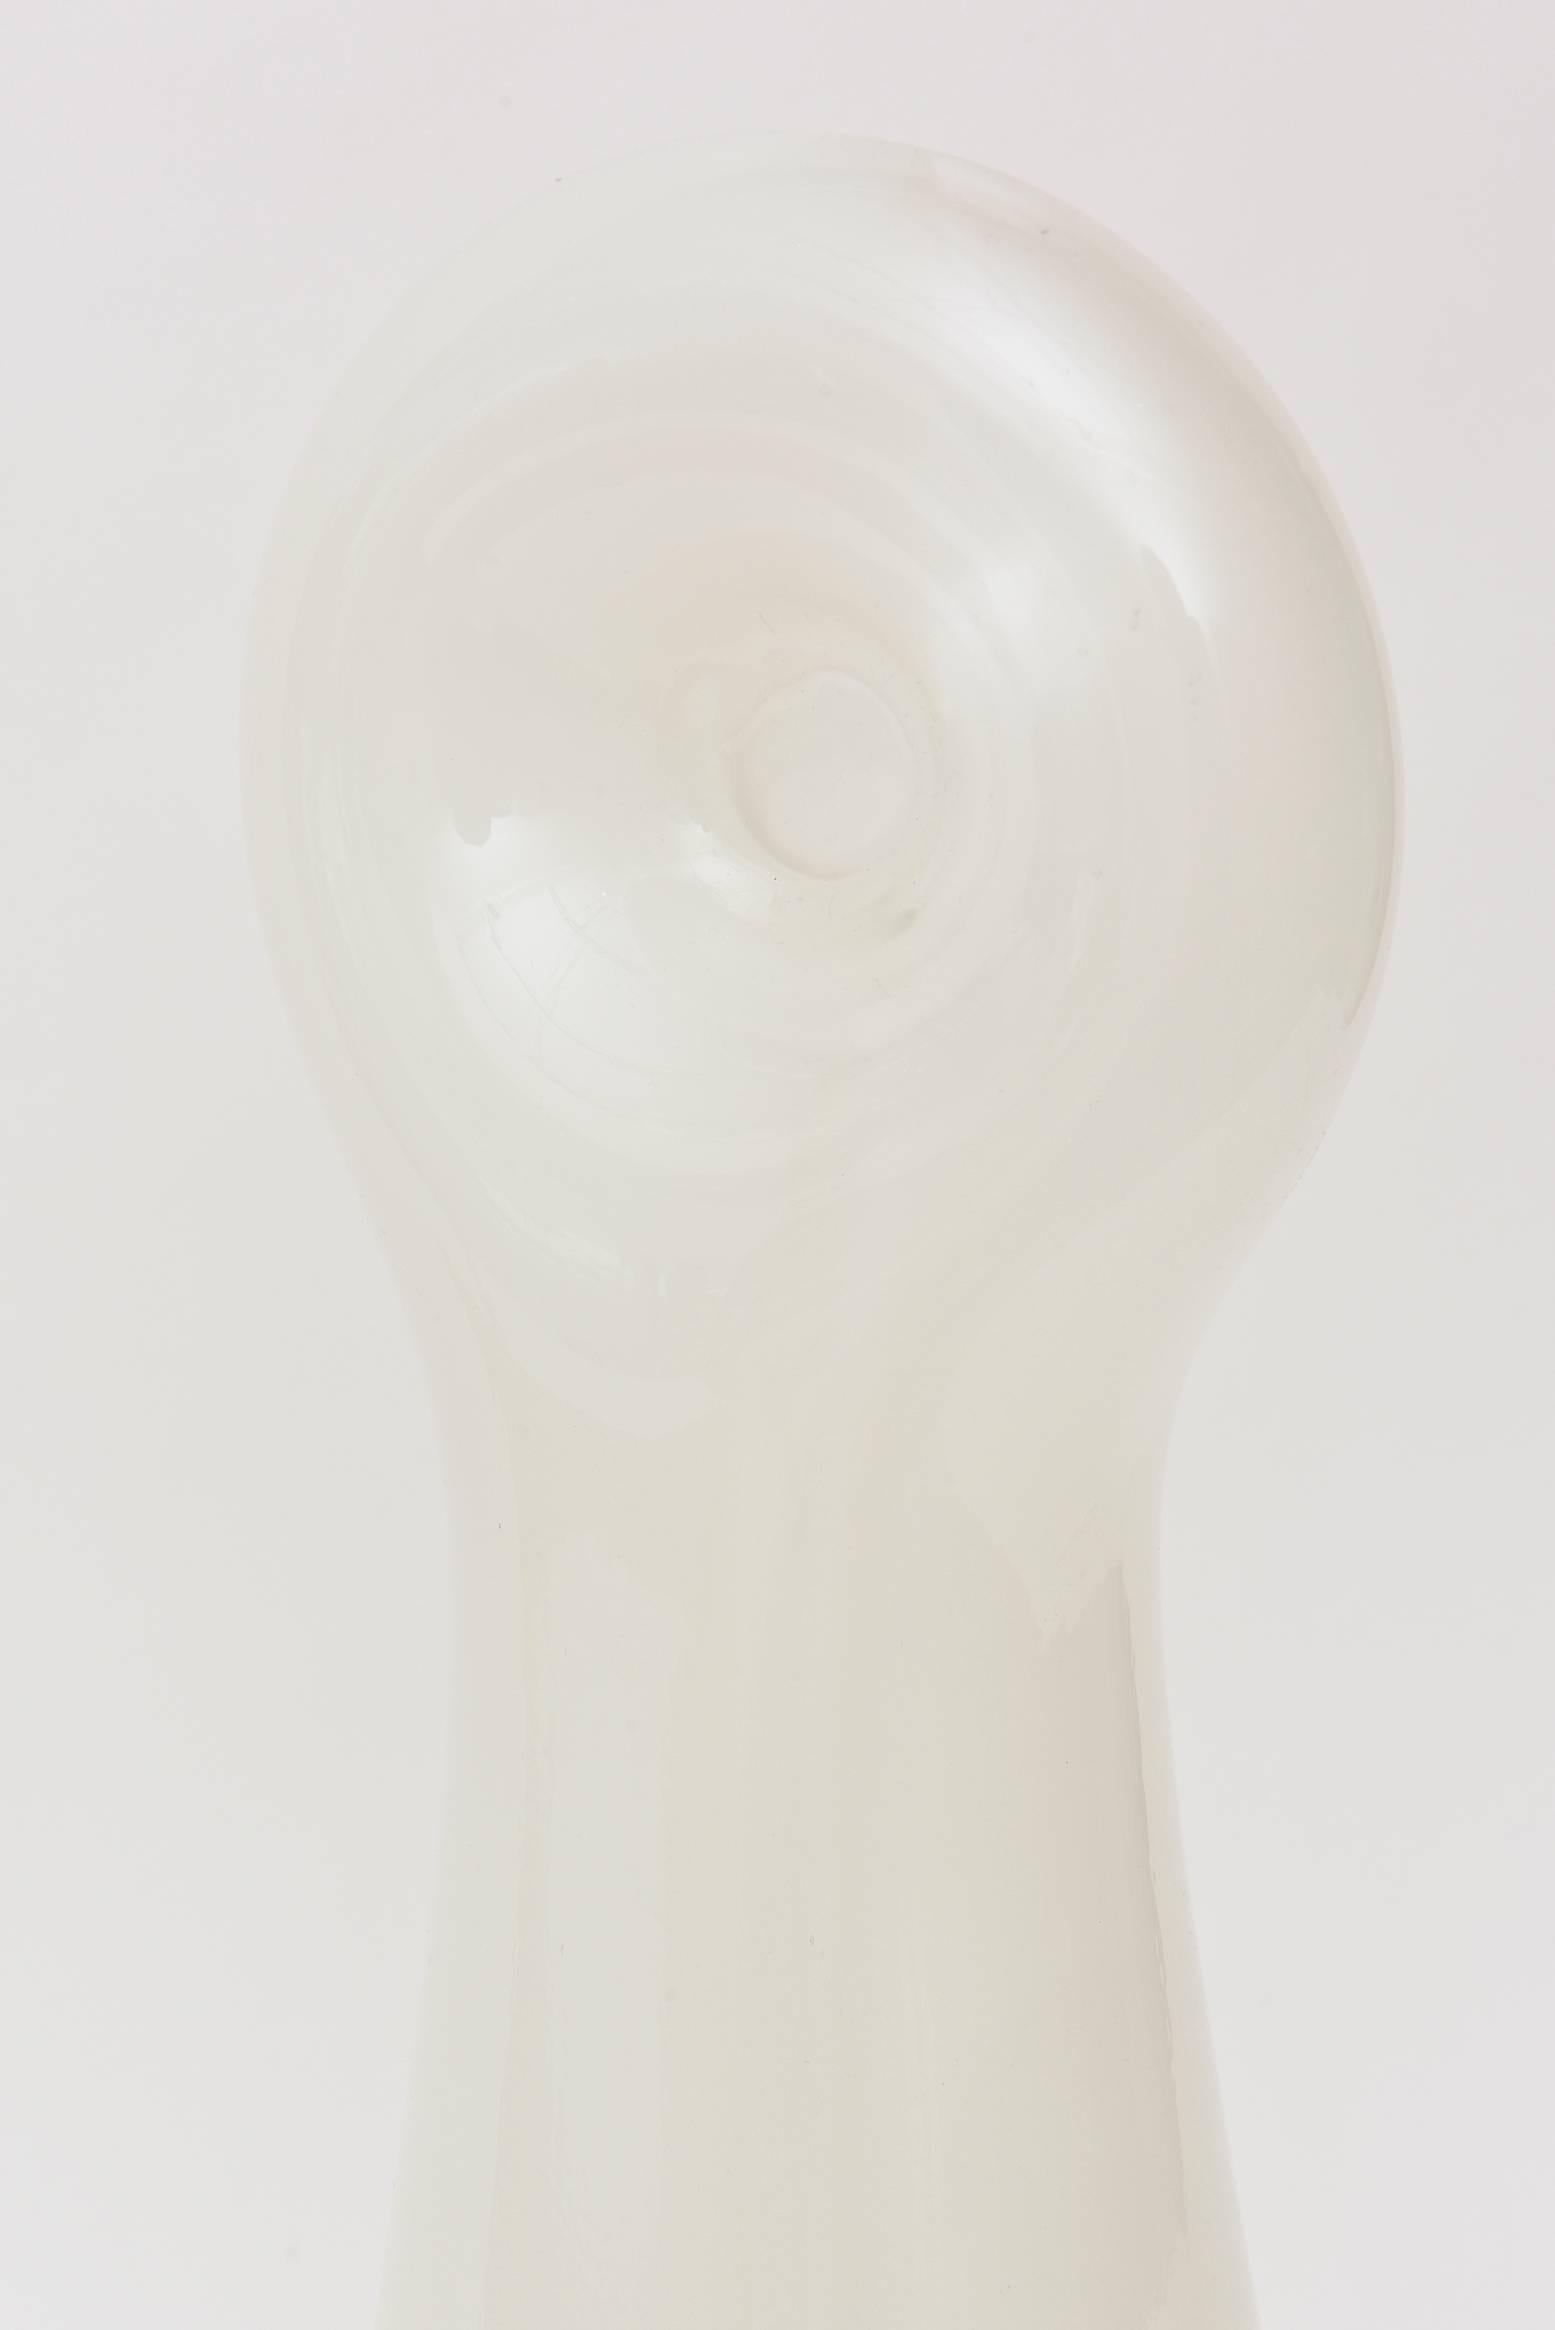 Modern Vistosi Murano Glass Lamp Vintage